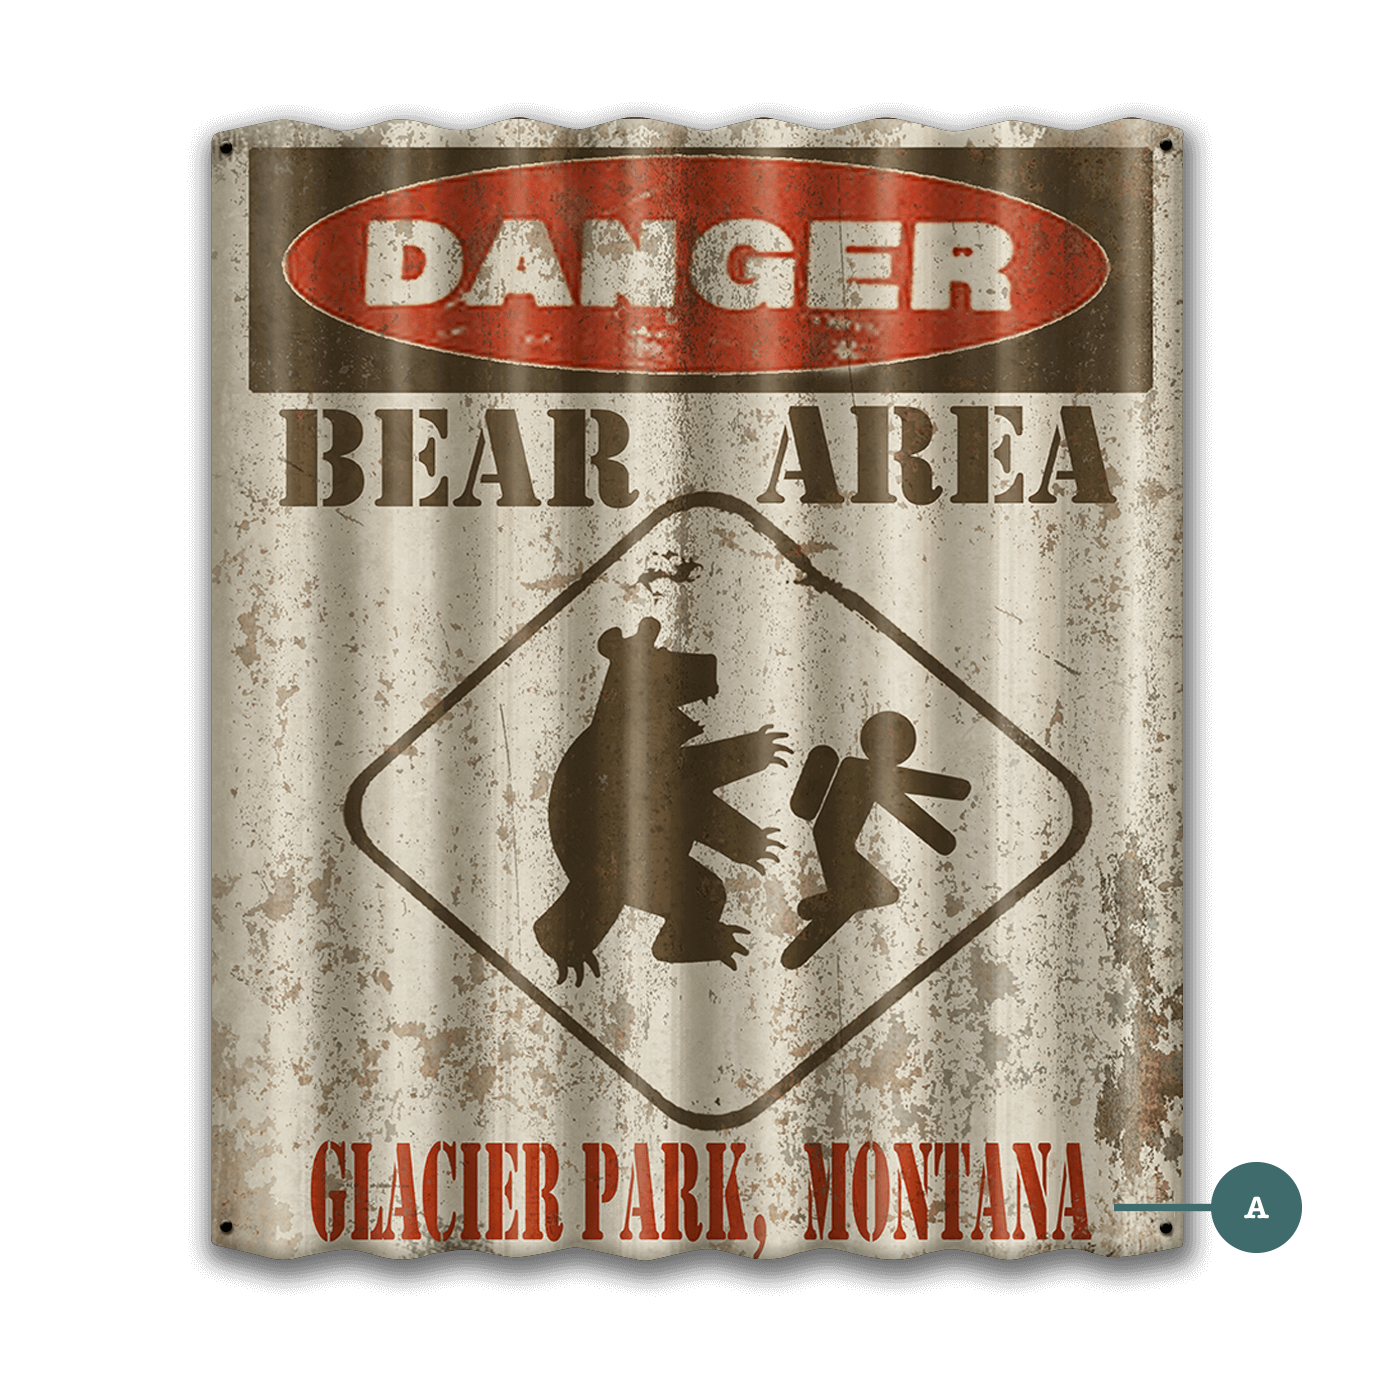 Danger Bear Area - Corrugated Metal Sign